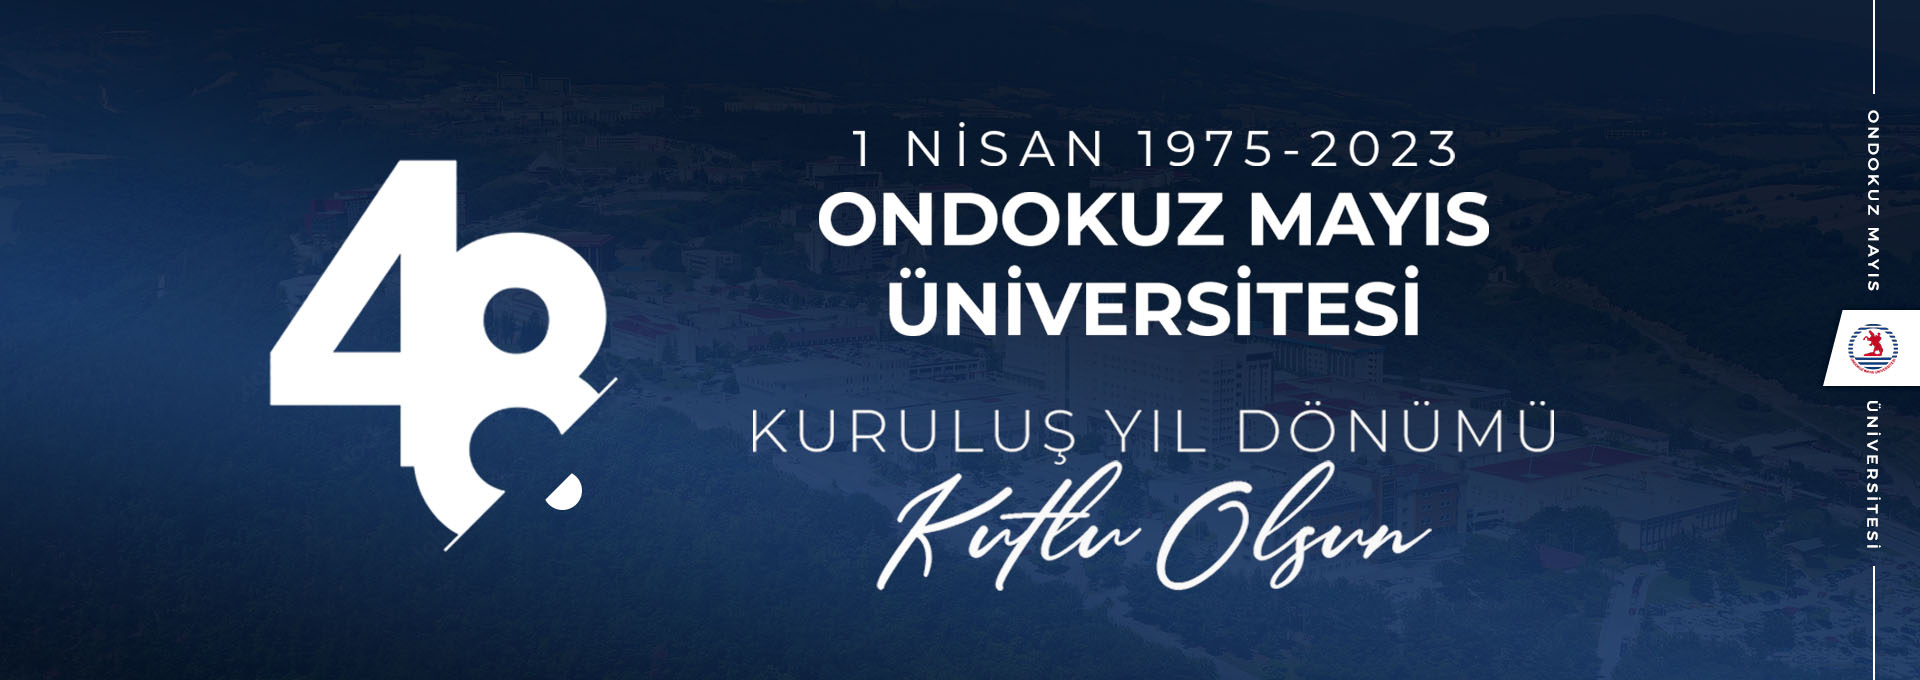 Happy 48th Anniversary of Ondokuz Mayis University!